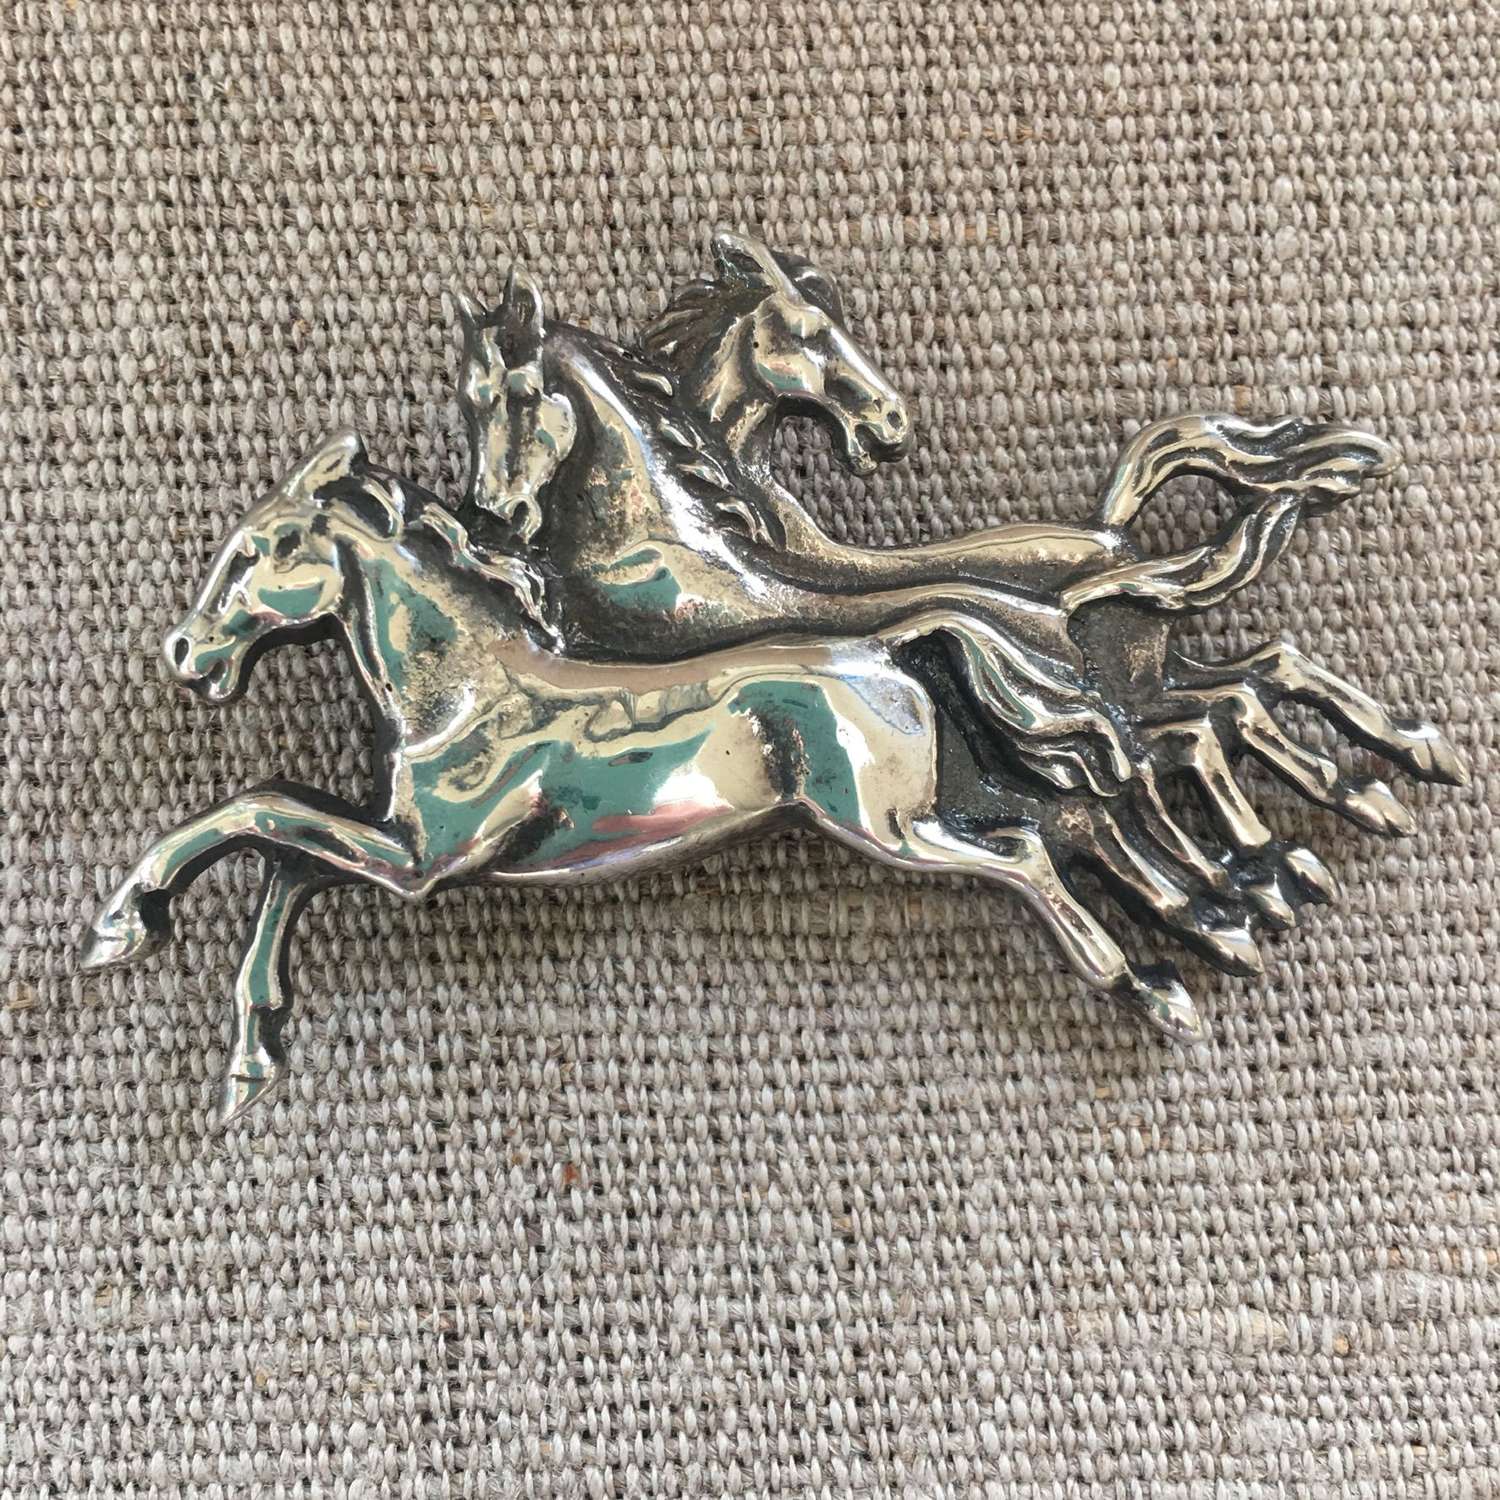 Silver three stallions brooch